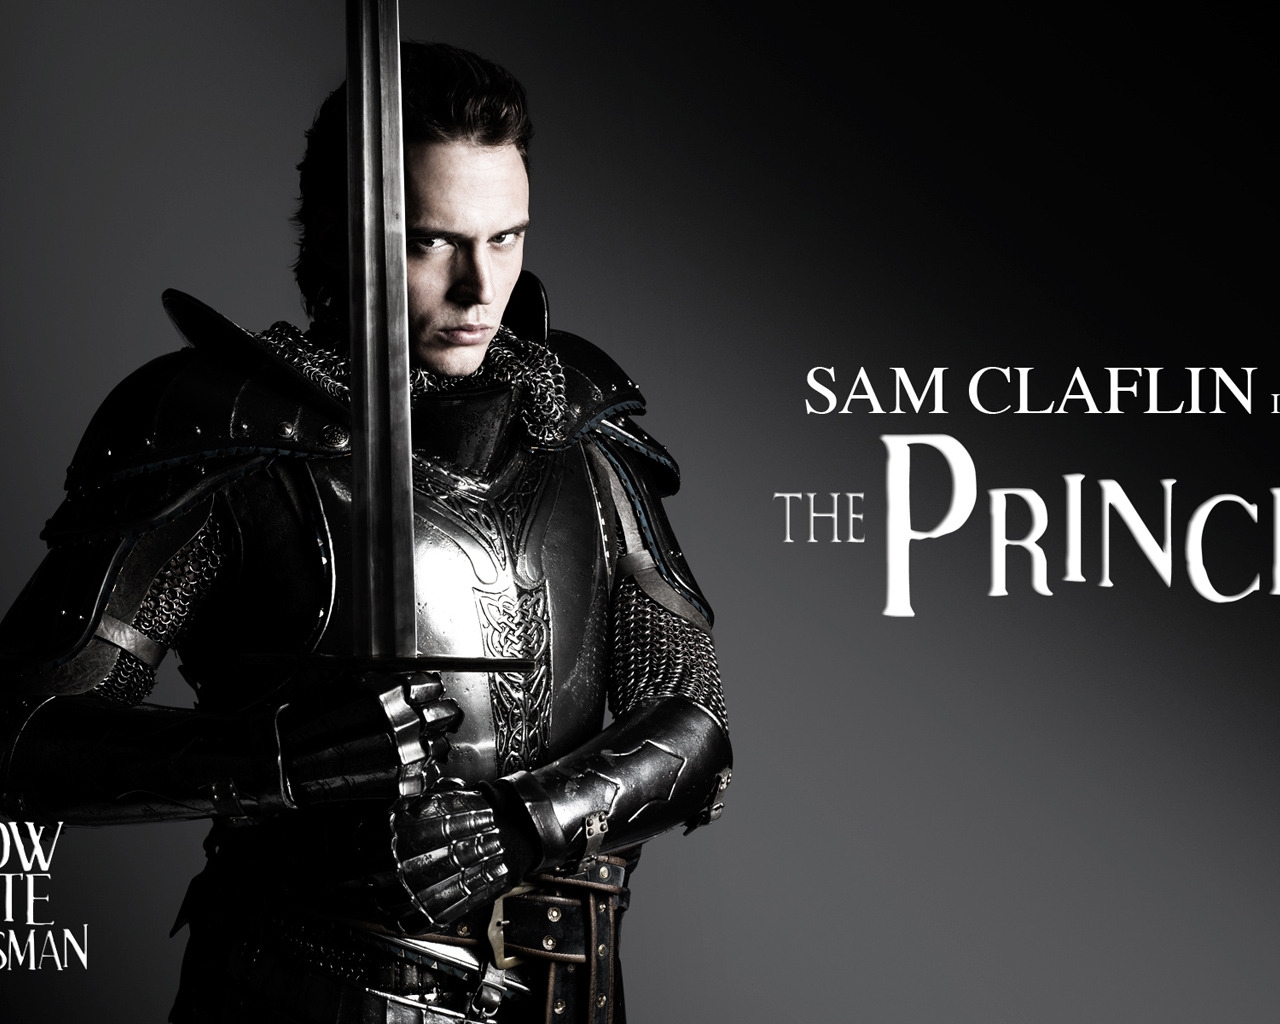 Sam Claflin The Prince for 1280 x 1024 resolution